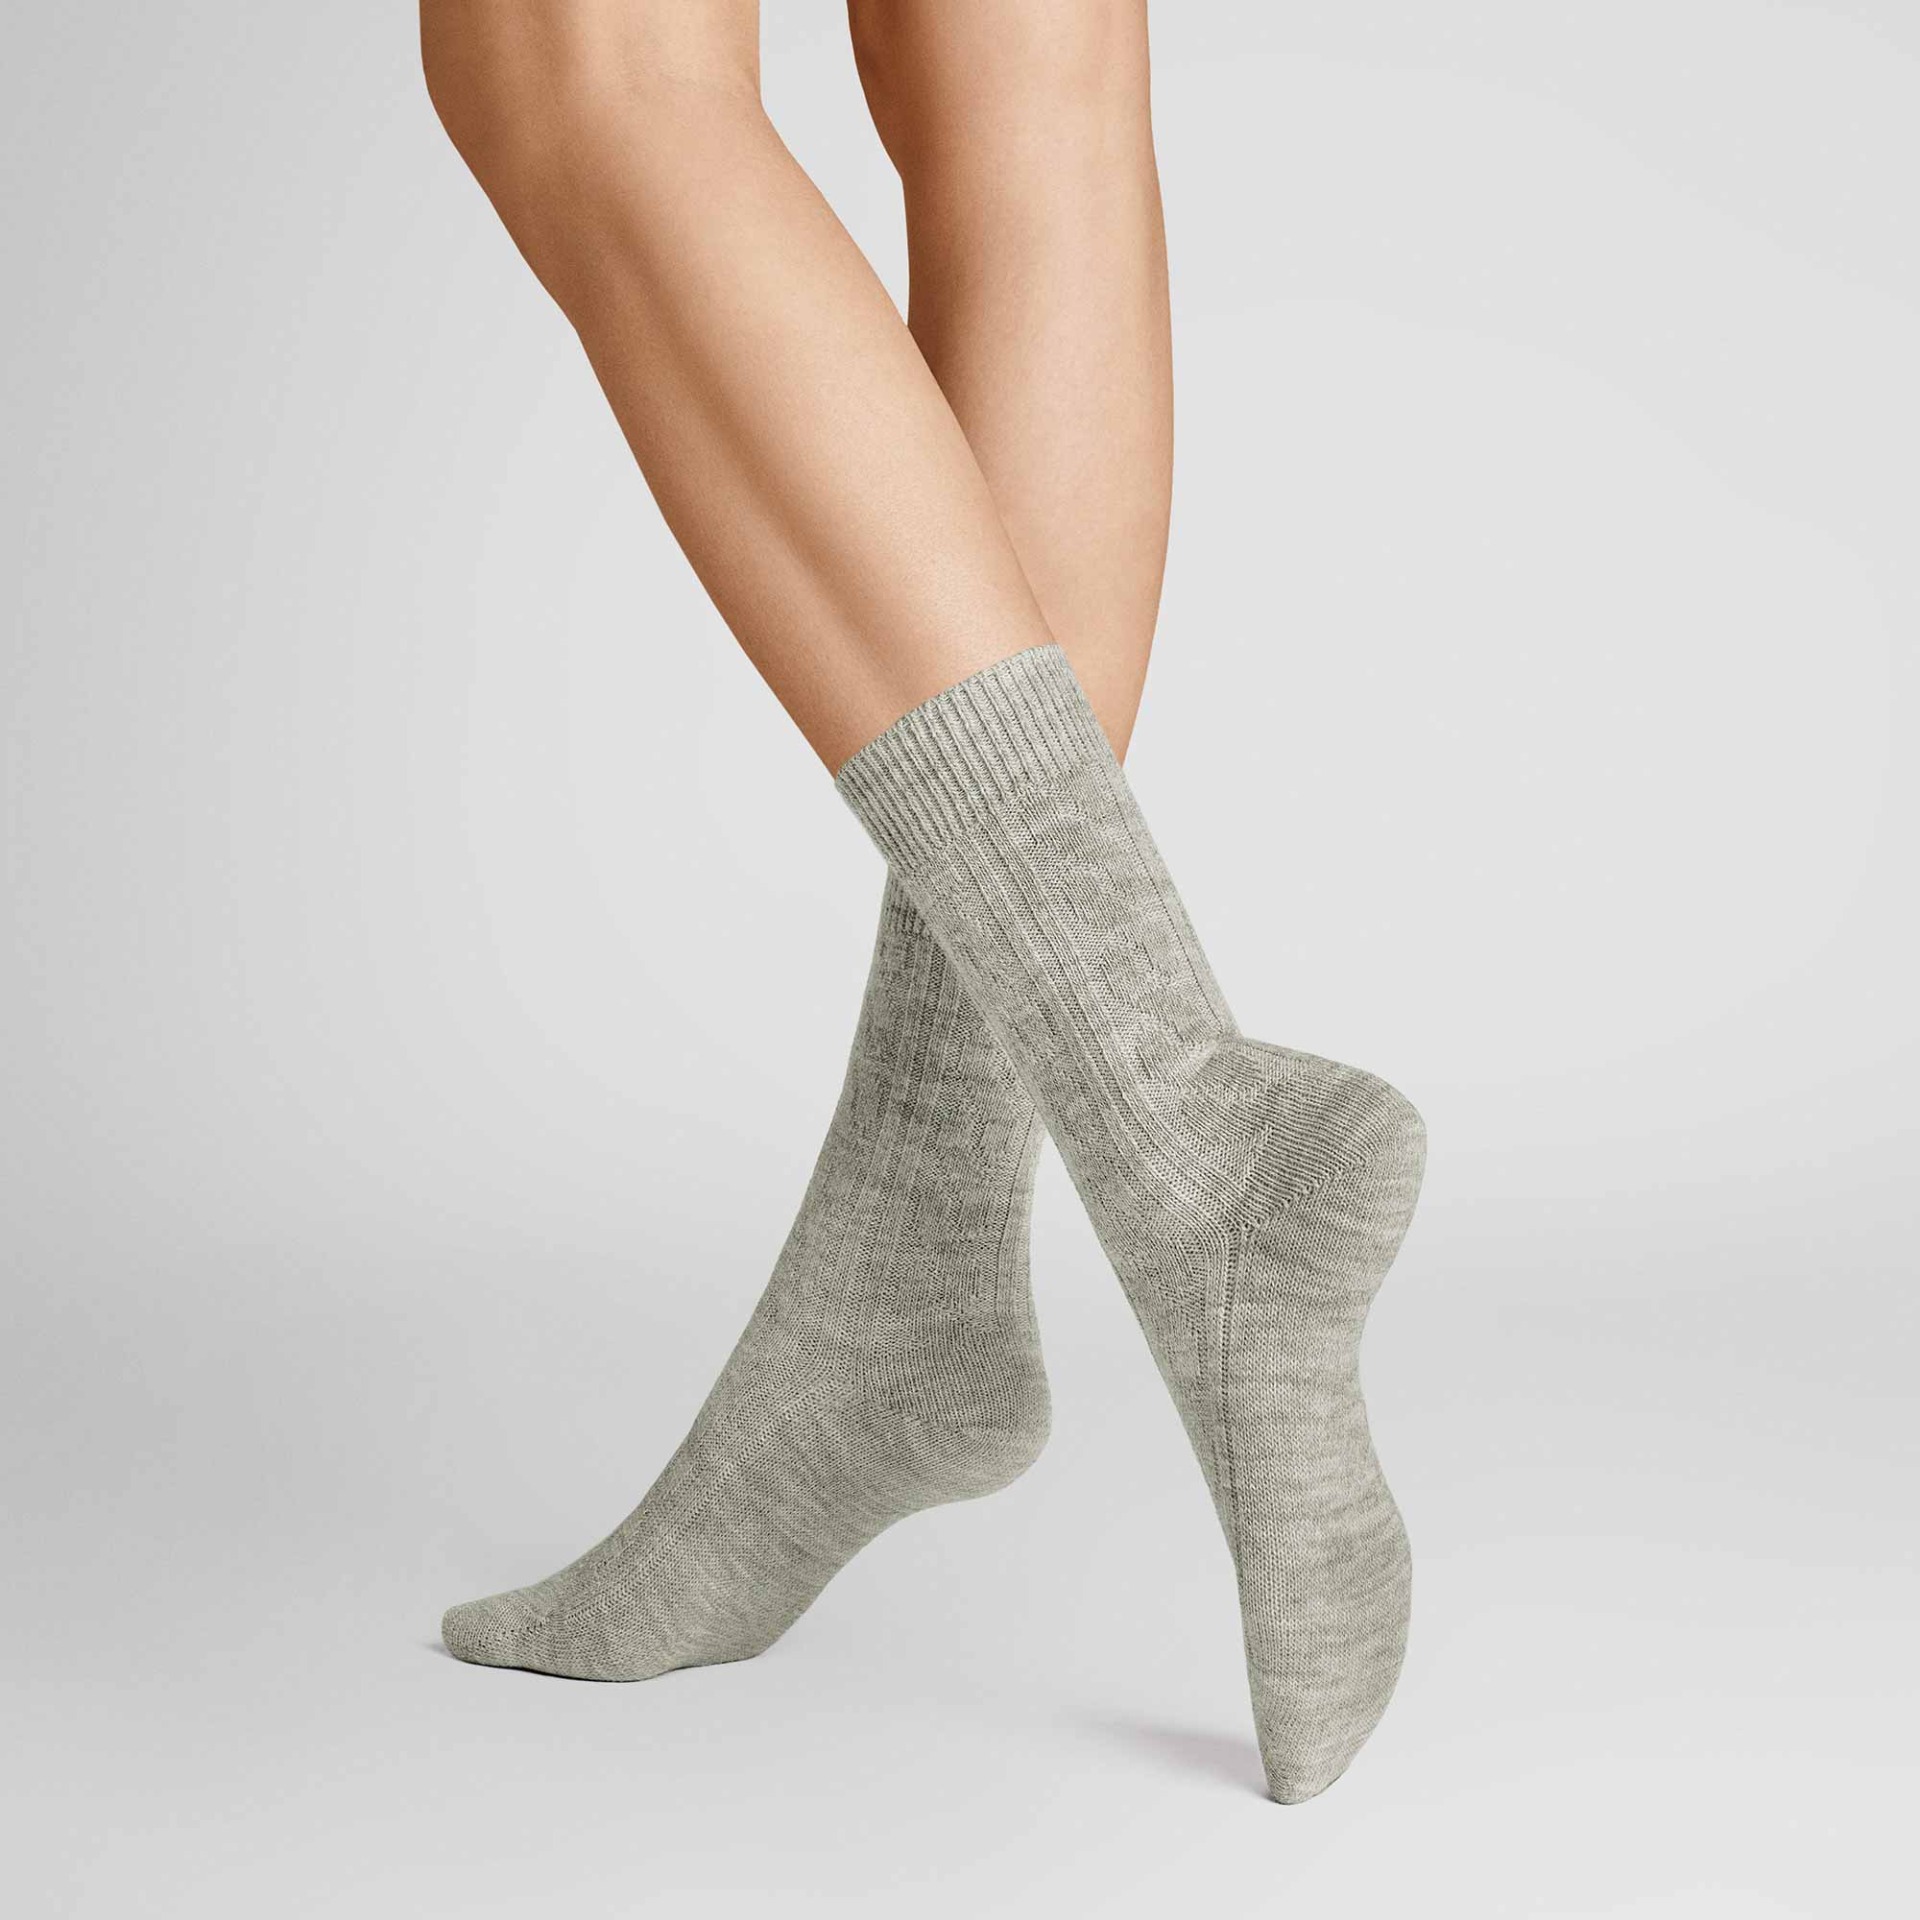 HUDSON Damen WINTER PLAIT -  39/42 - Wärmende Socken mit Zopf-Muster - Silber (Grau)